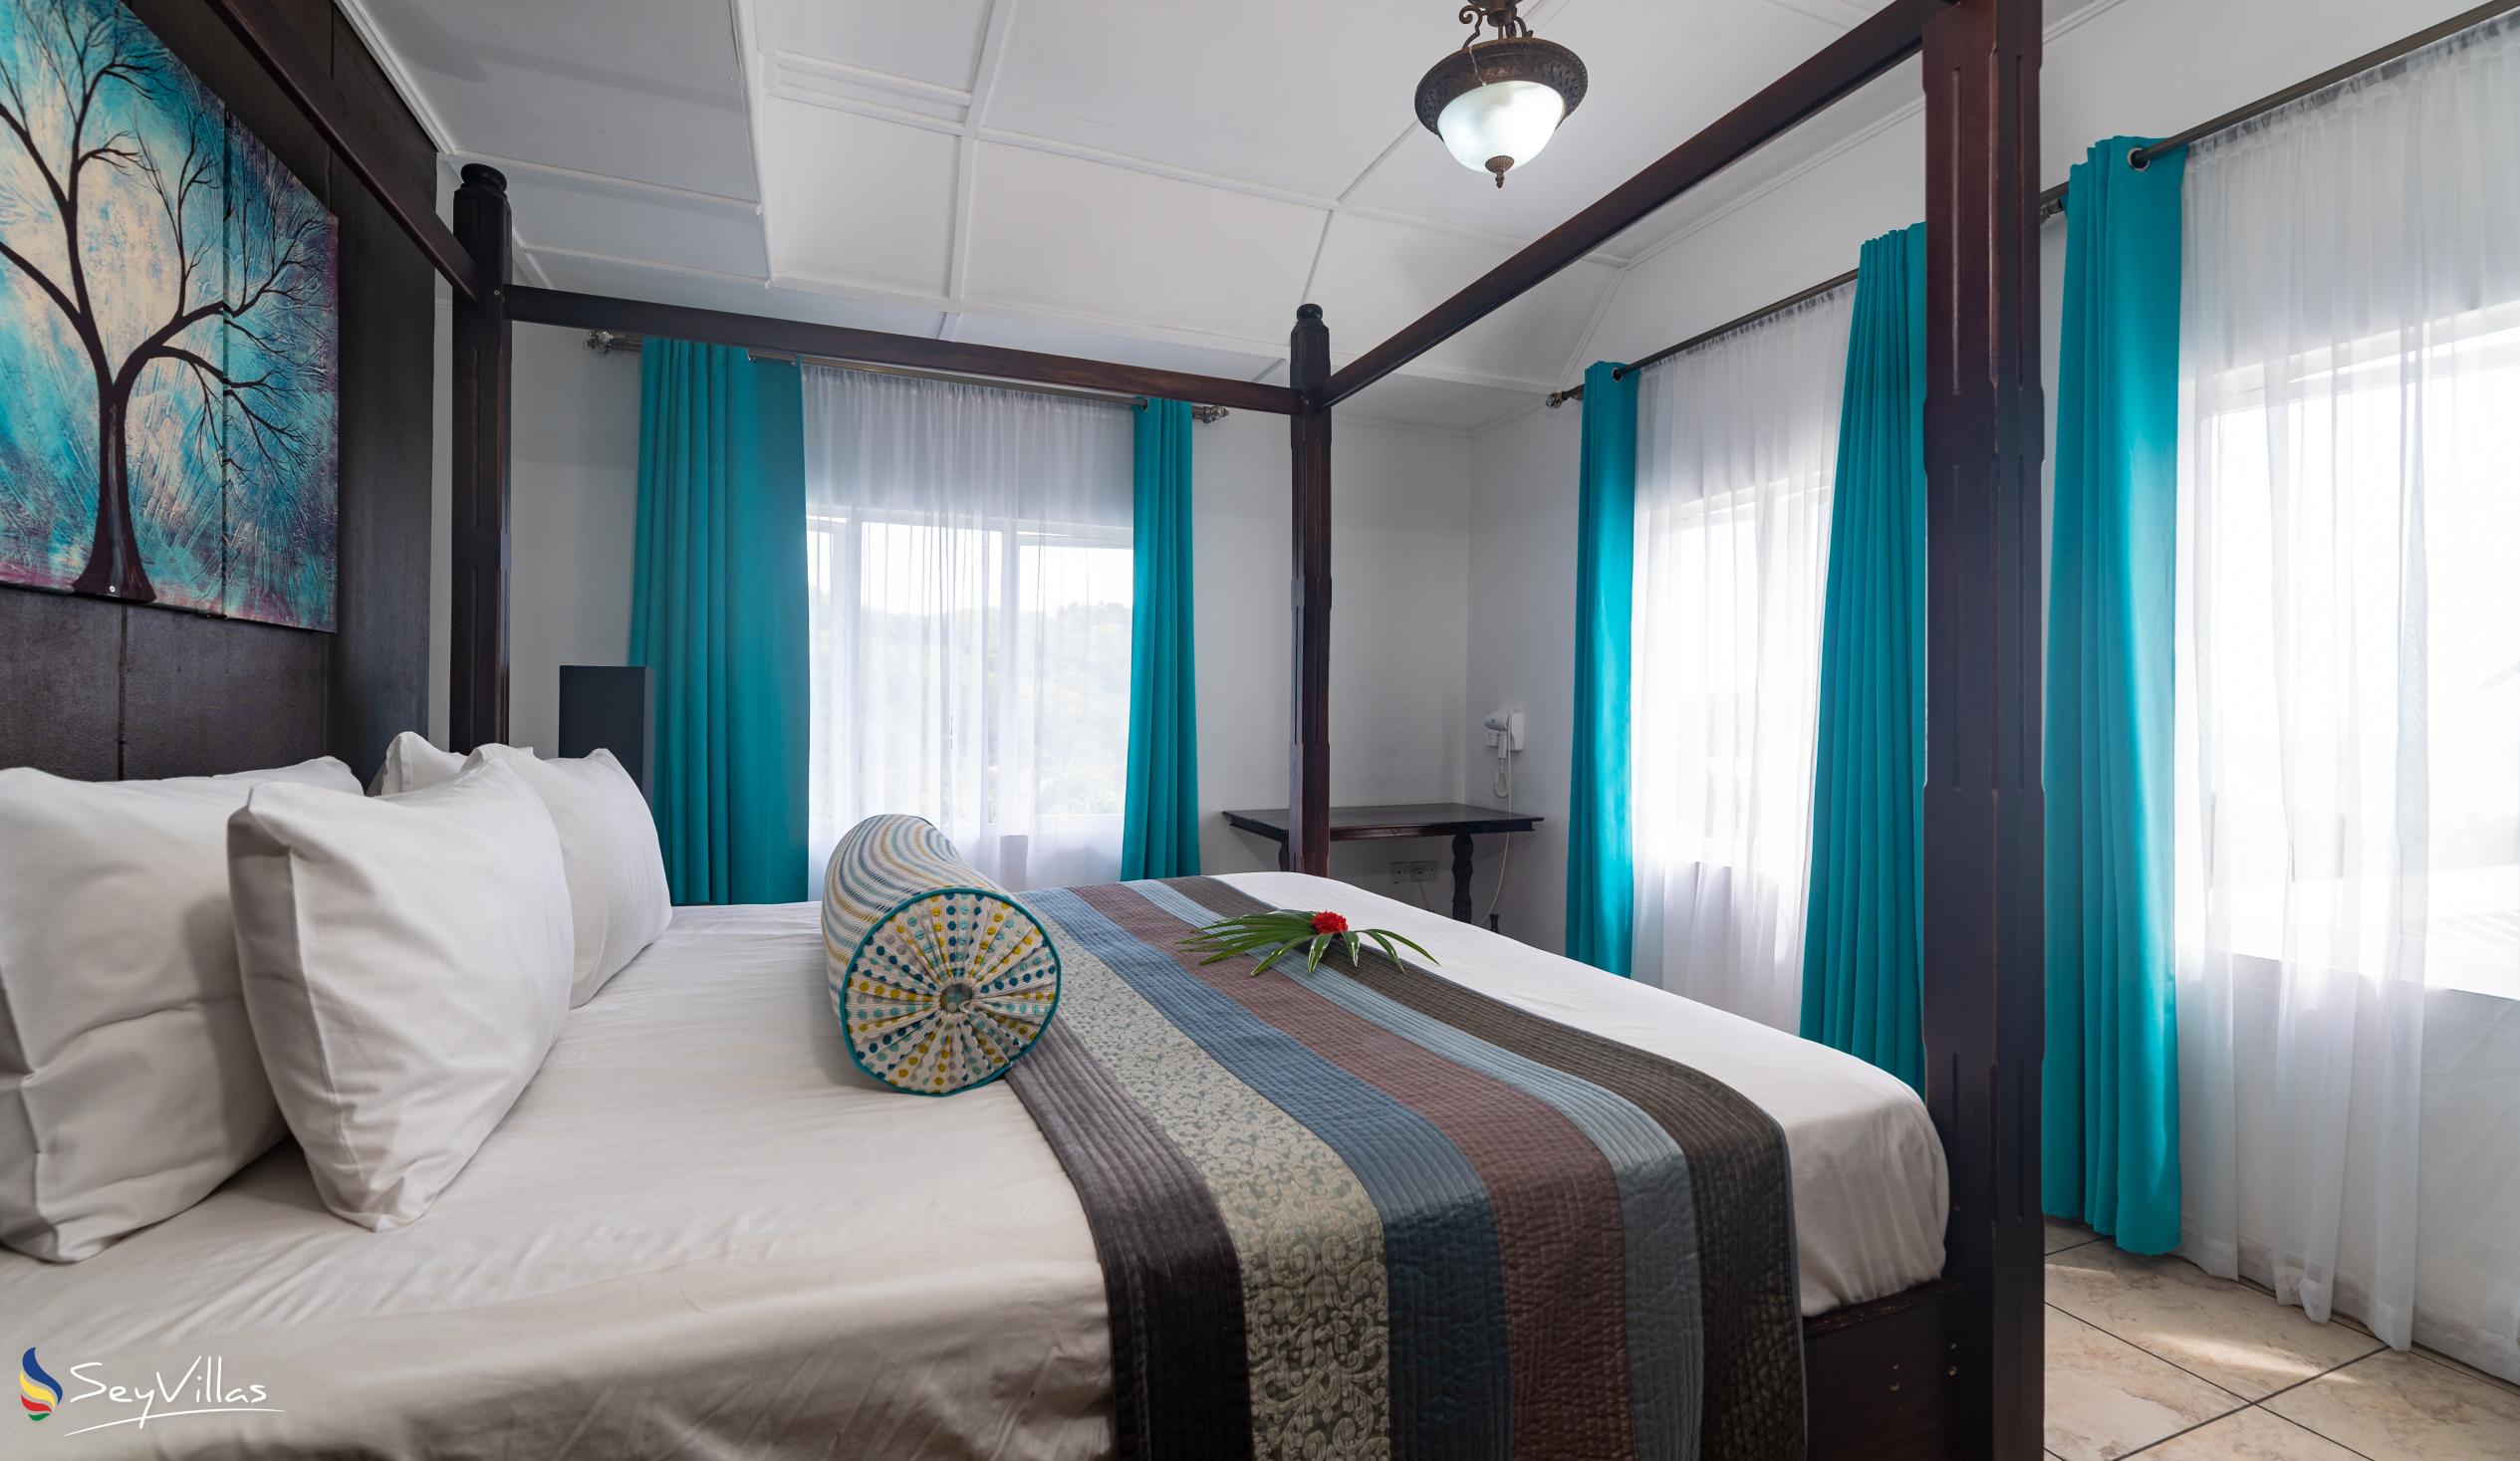 Photo 114: Stephna Residence - 2-Bedroom Villa - Mahé (Seychelles)